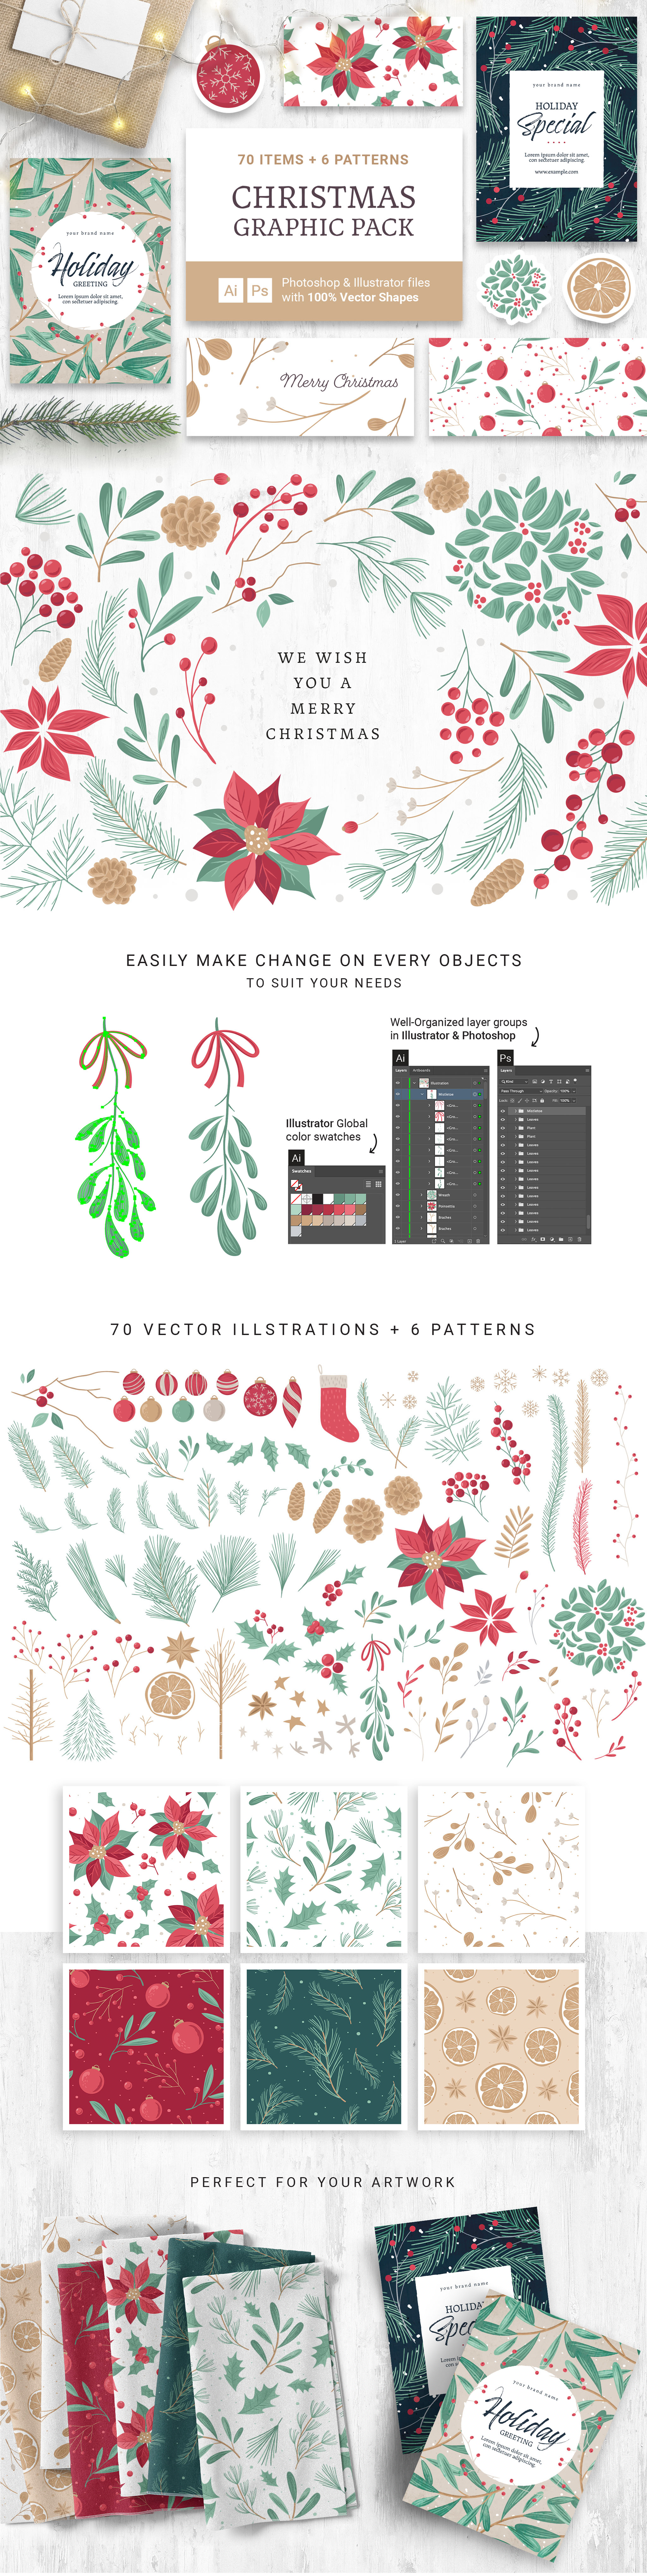 Festive Christmas Graphics Pack (for Photoshop & Illustrator)